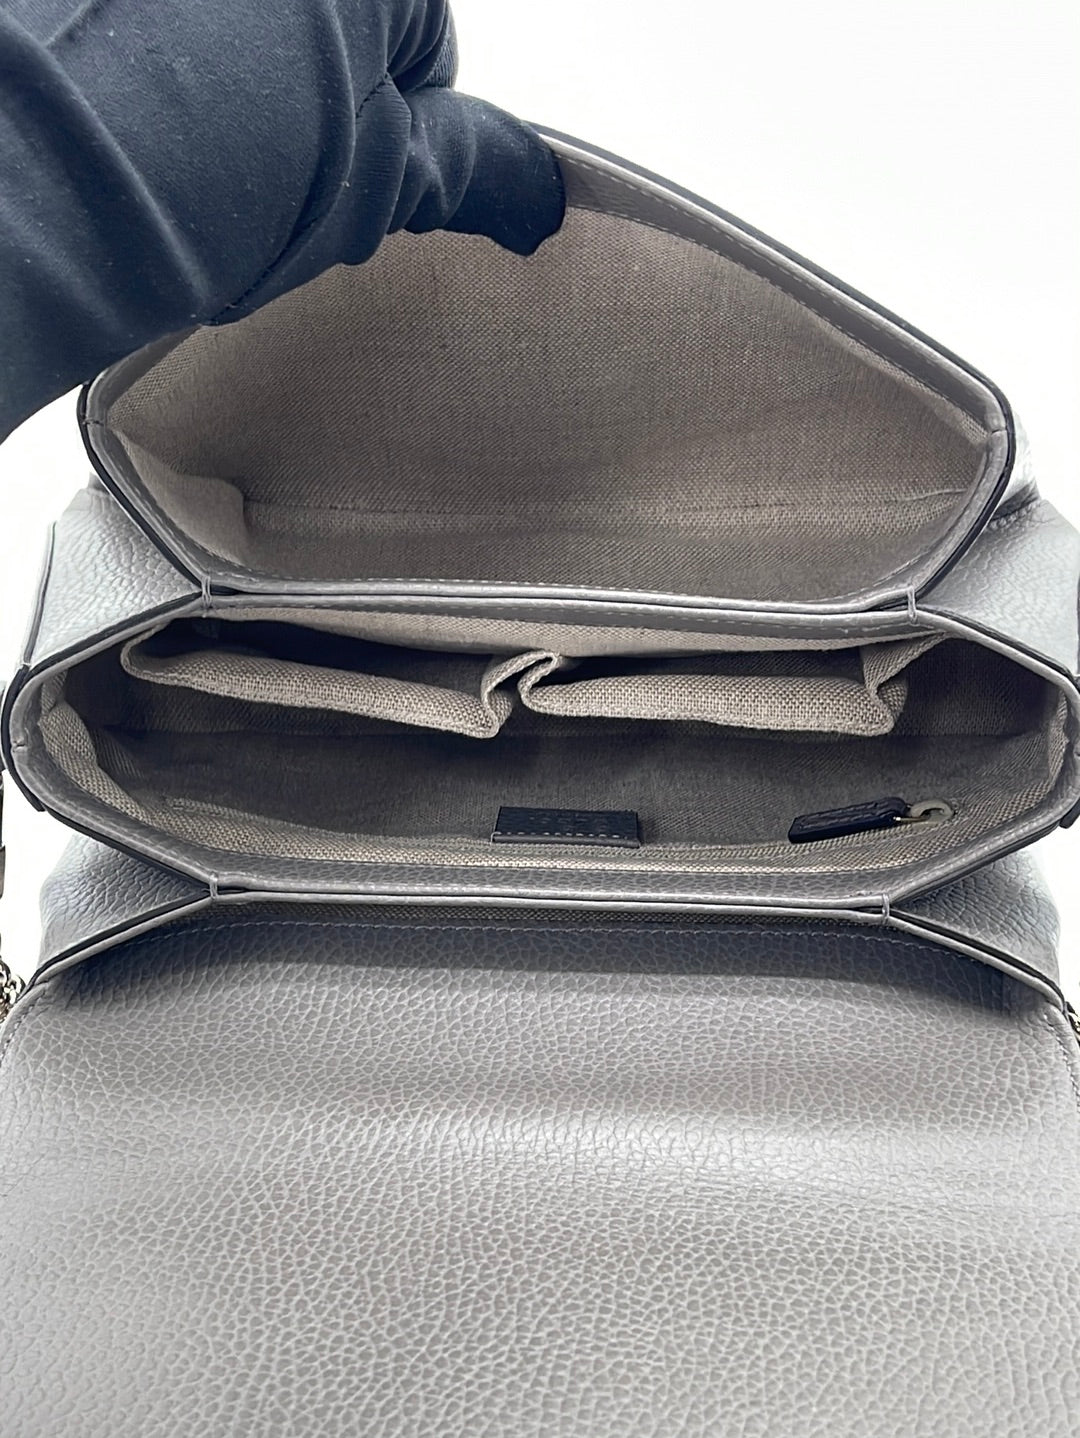 PRELOVED Gucci Interlocking GG Grey Dollar Leather Shoulder Bag 510302213048 062823